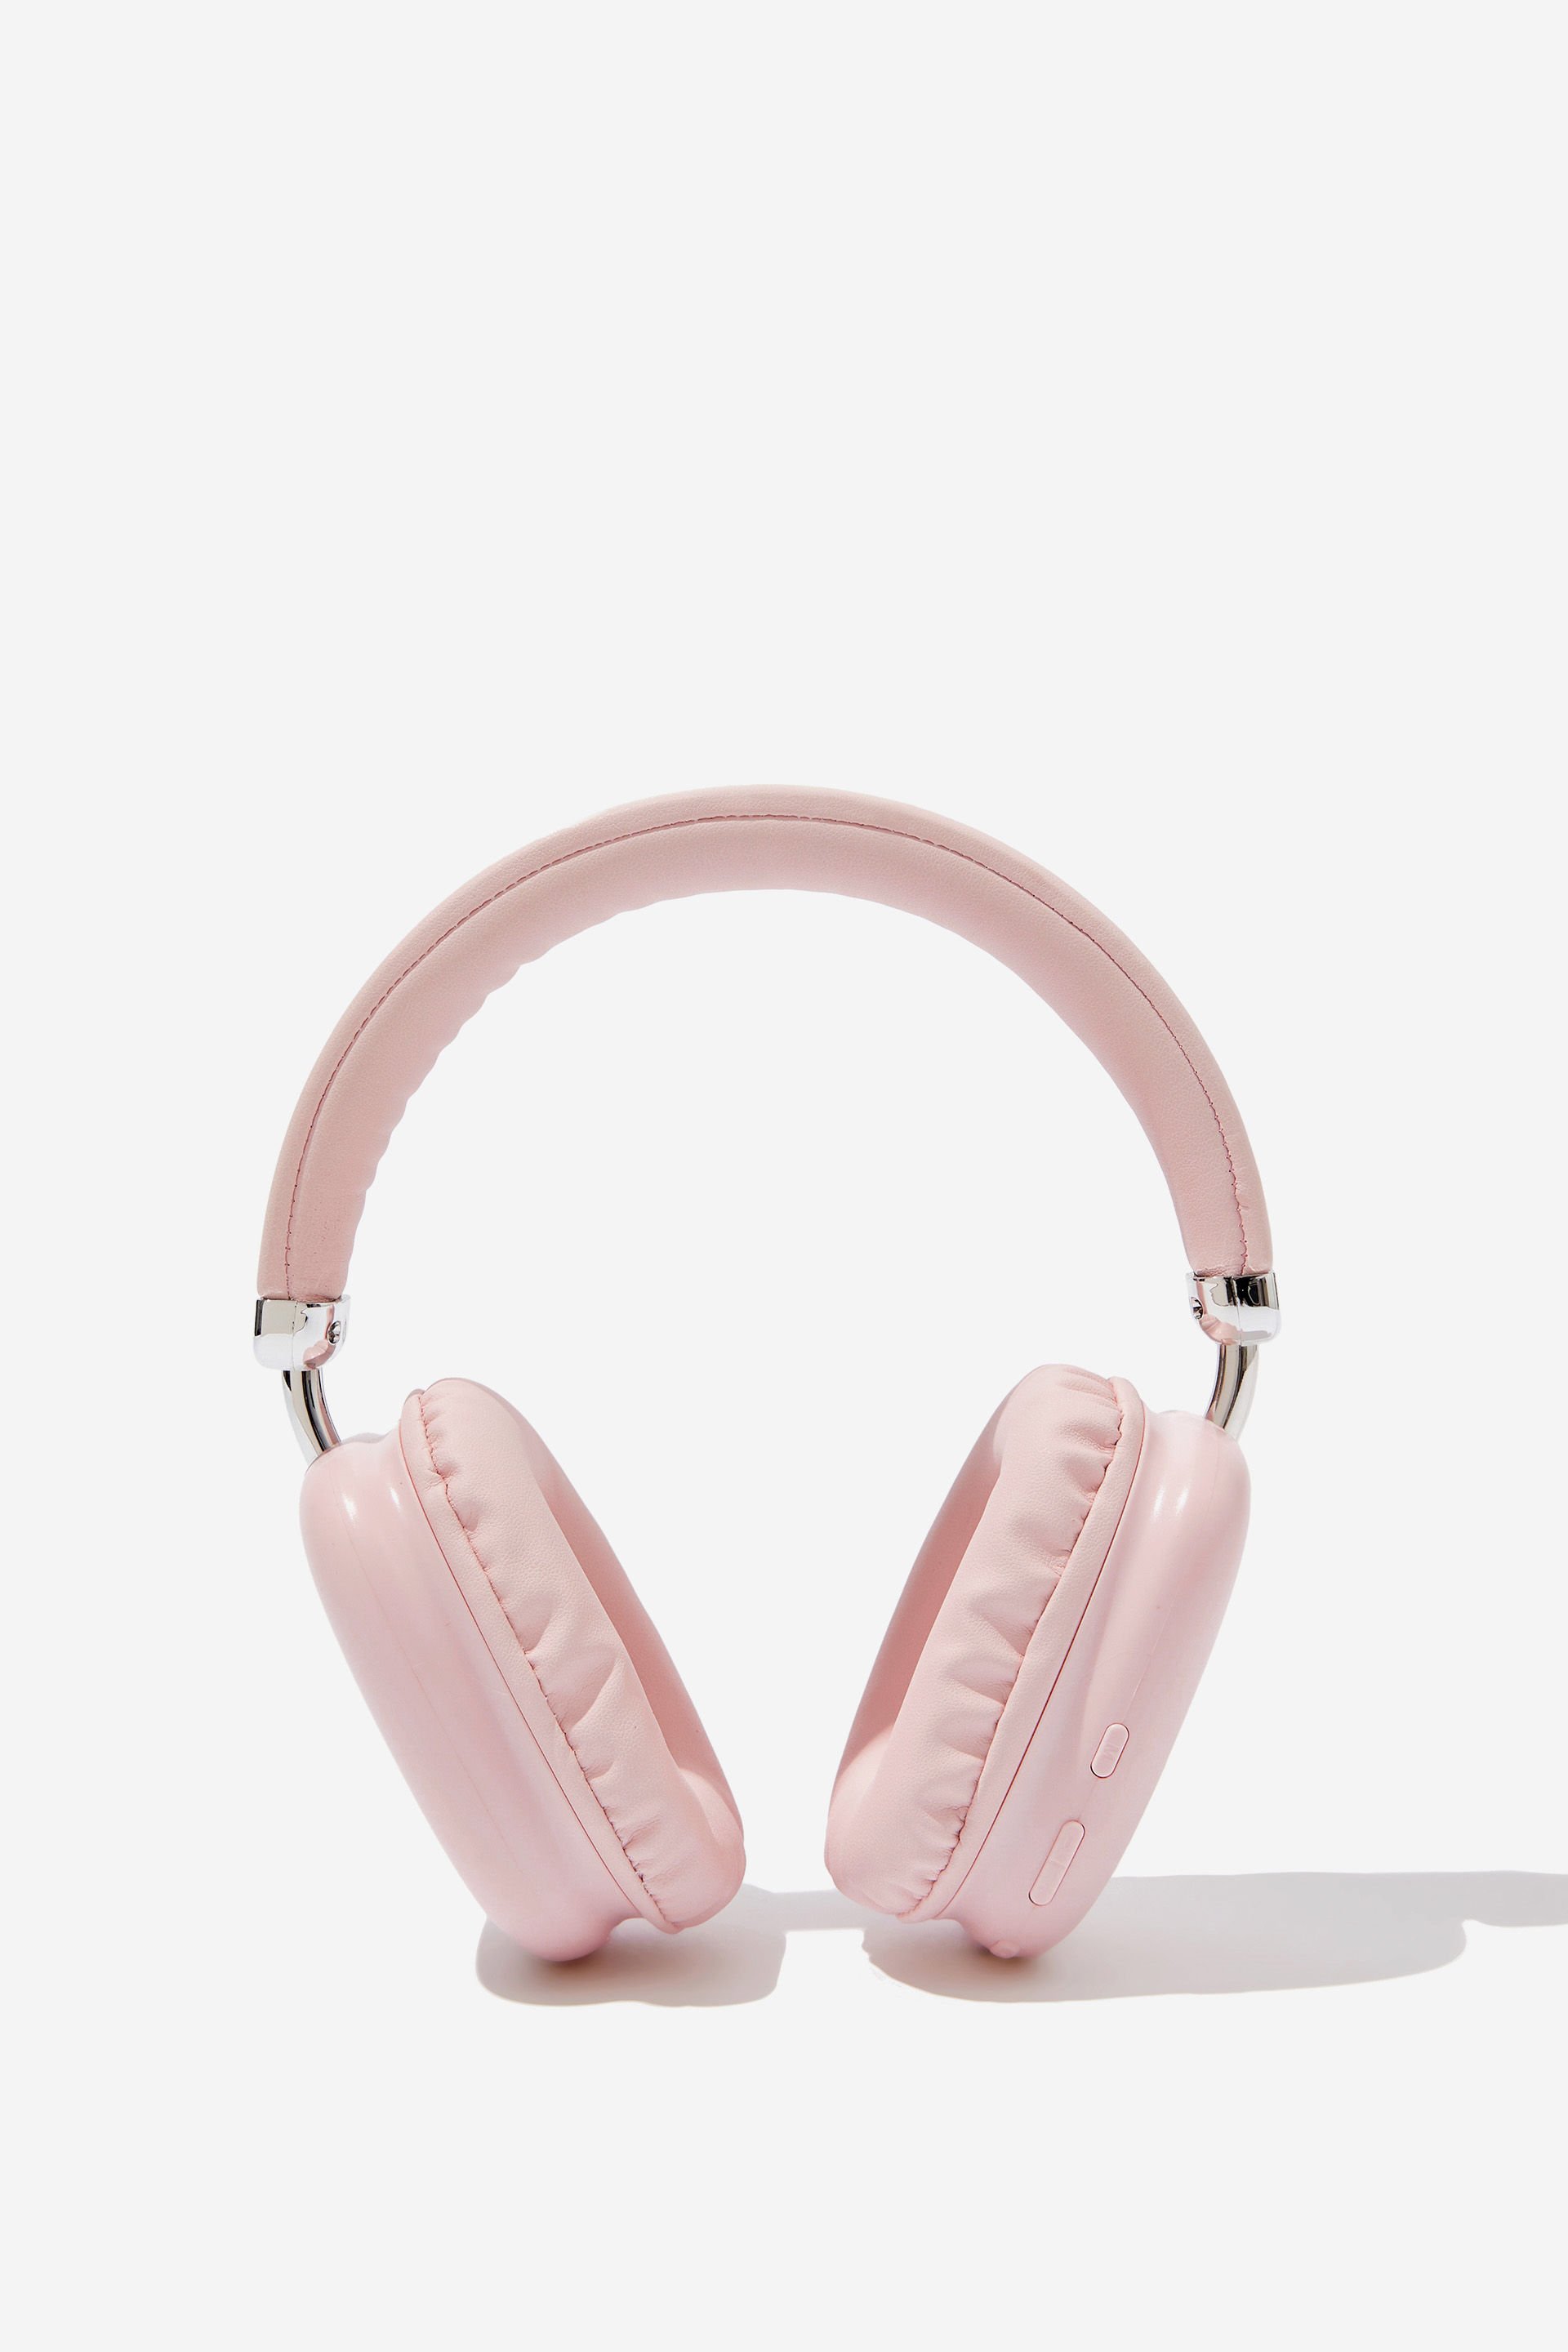 Typo - Wireless Headphones - Ballet blush